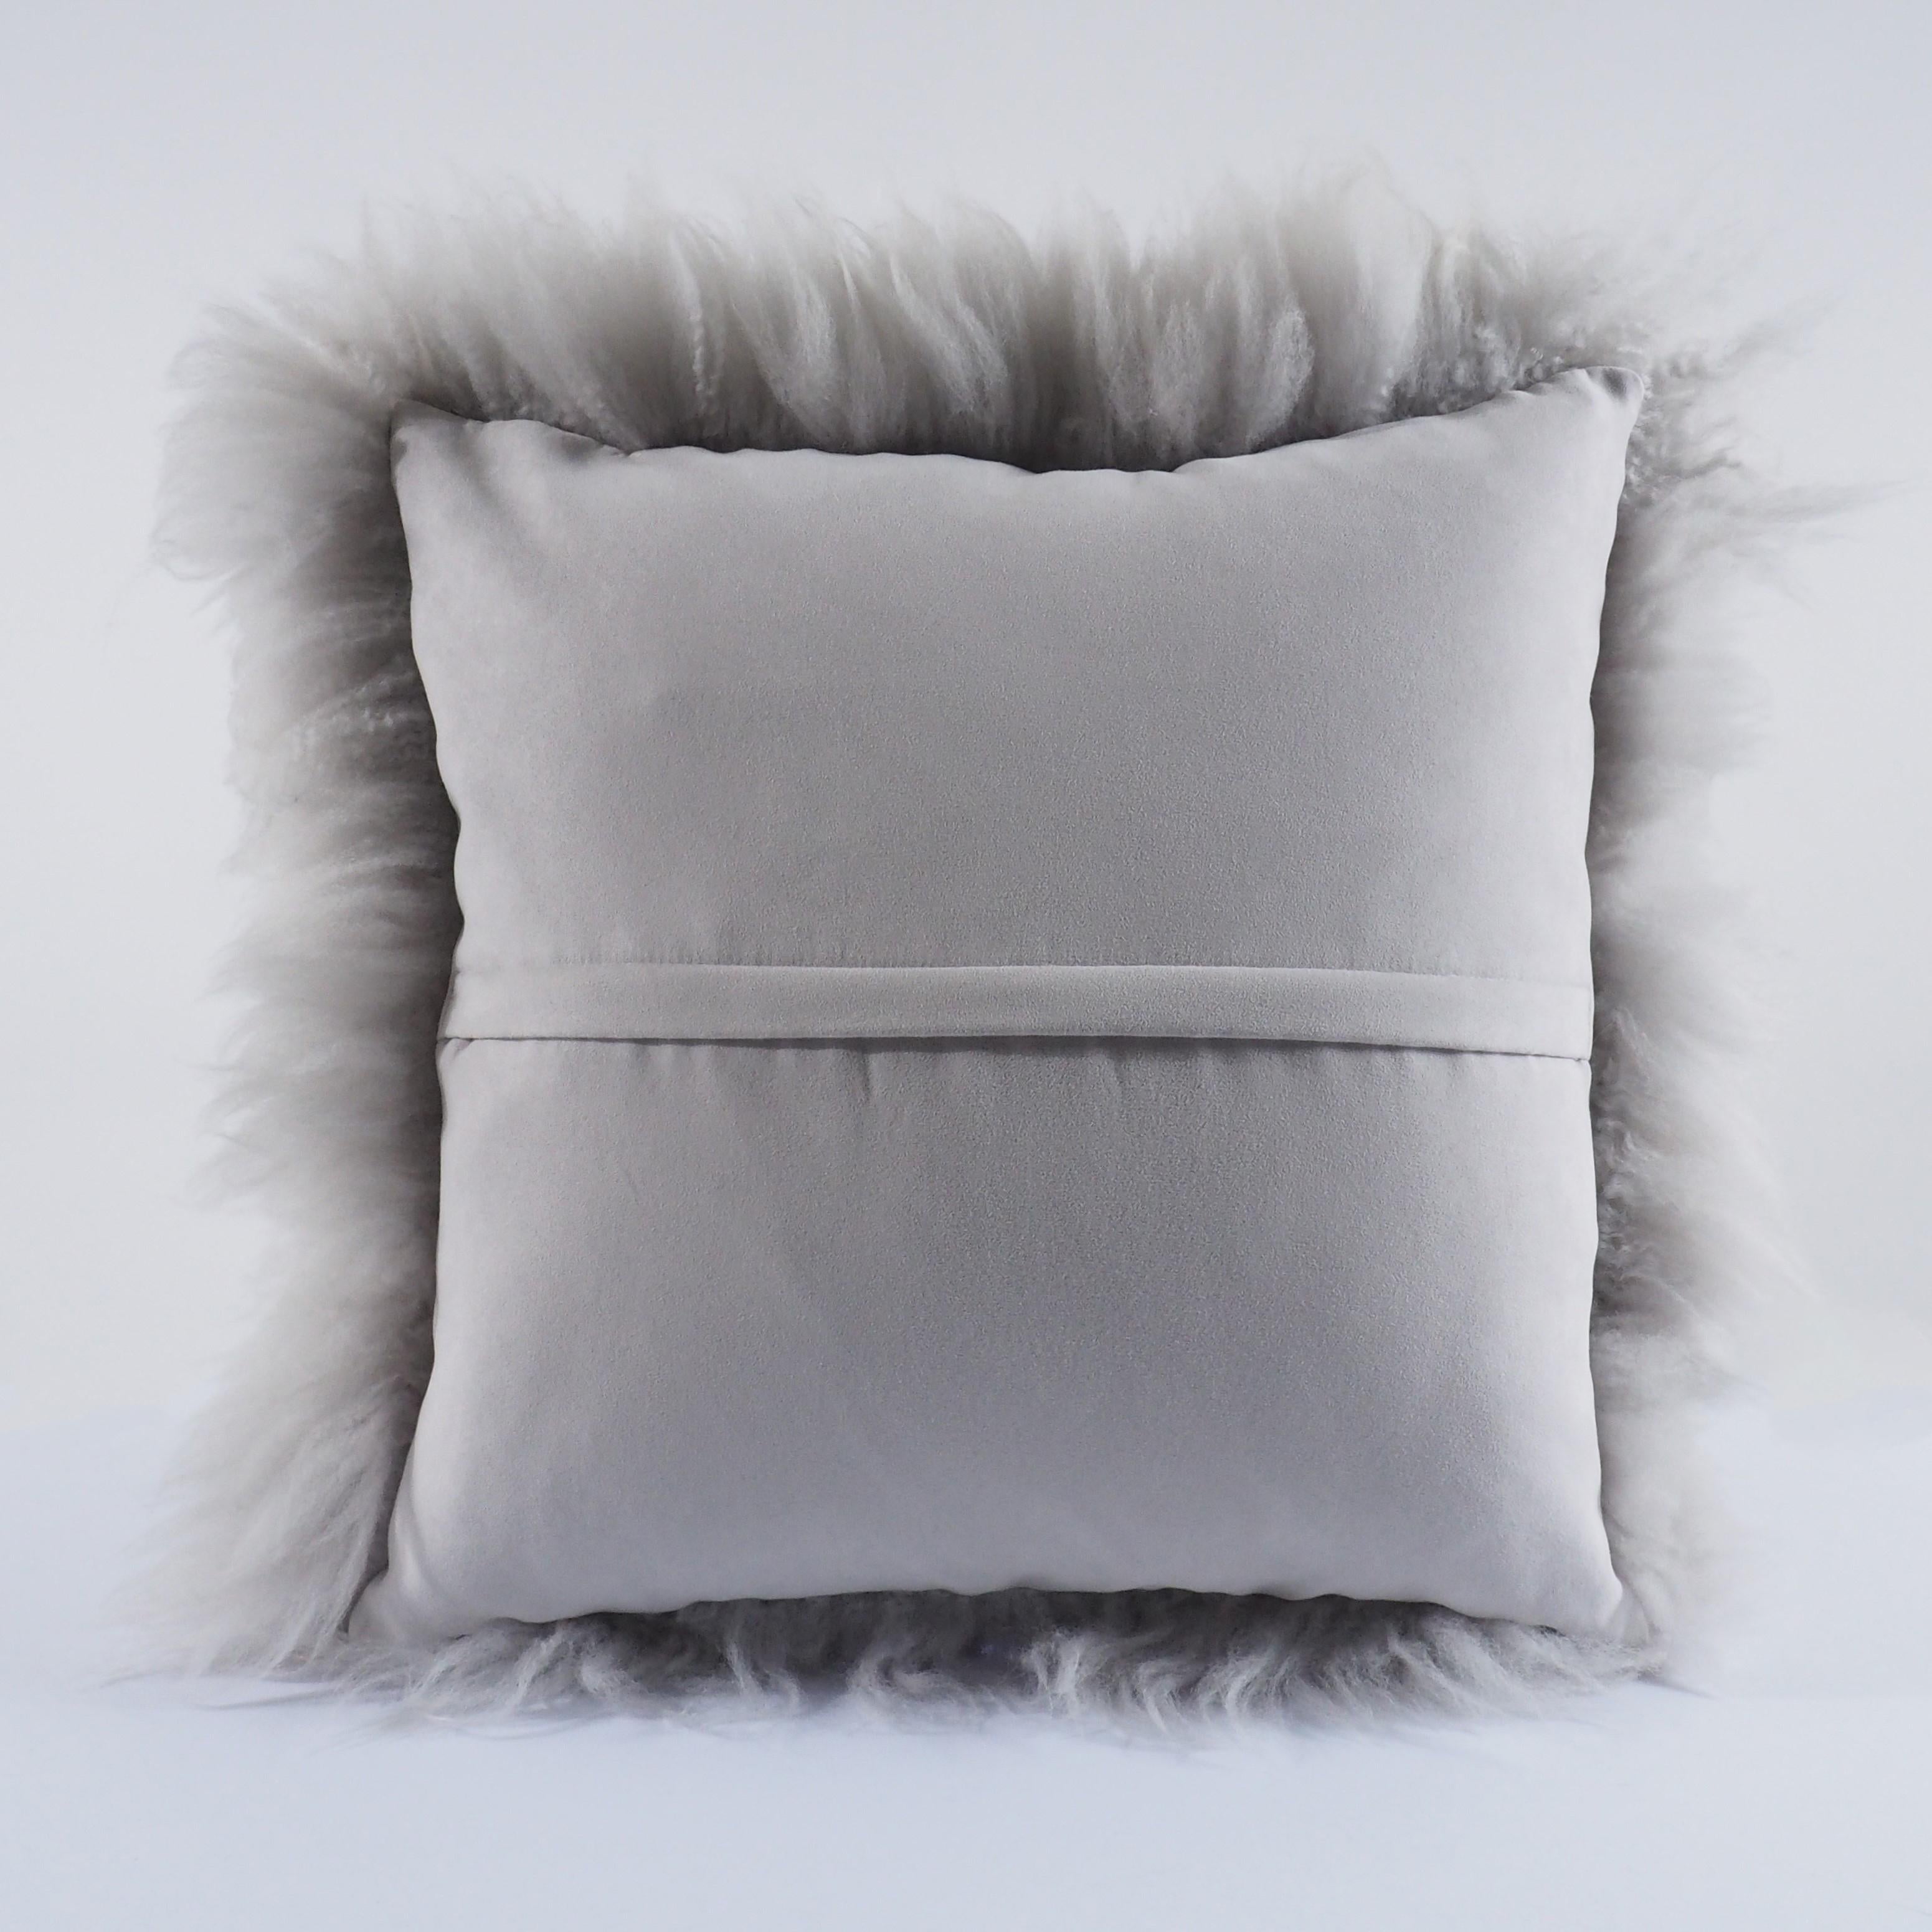 Italian Alps Light Grey Shearling Sheepskin Pillow Fluffy Cushion by Muchi Decor For Sale